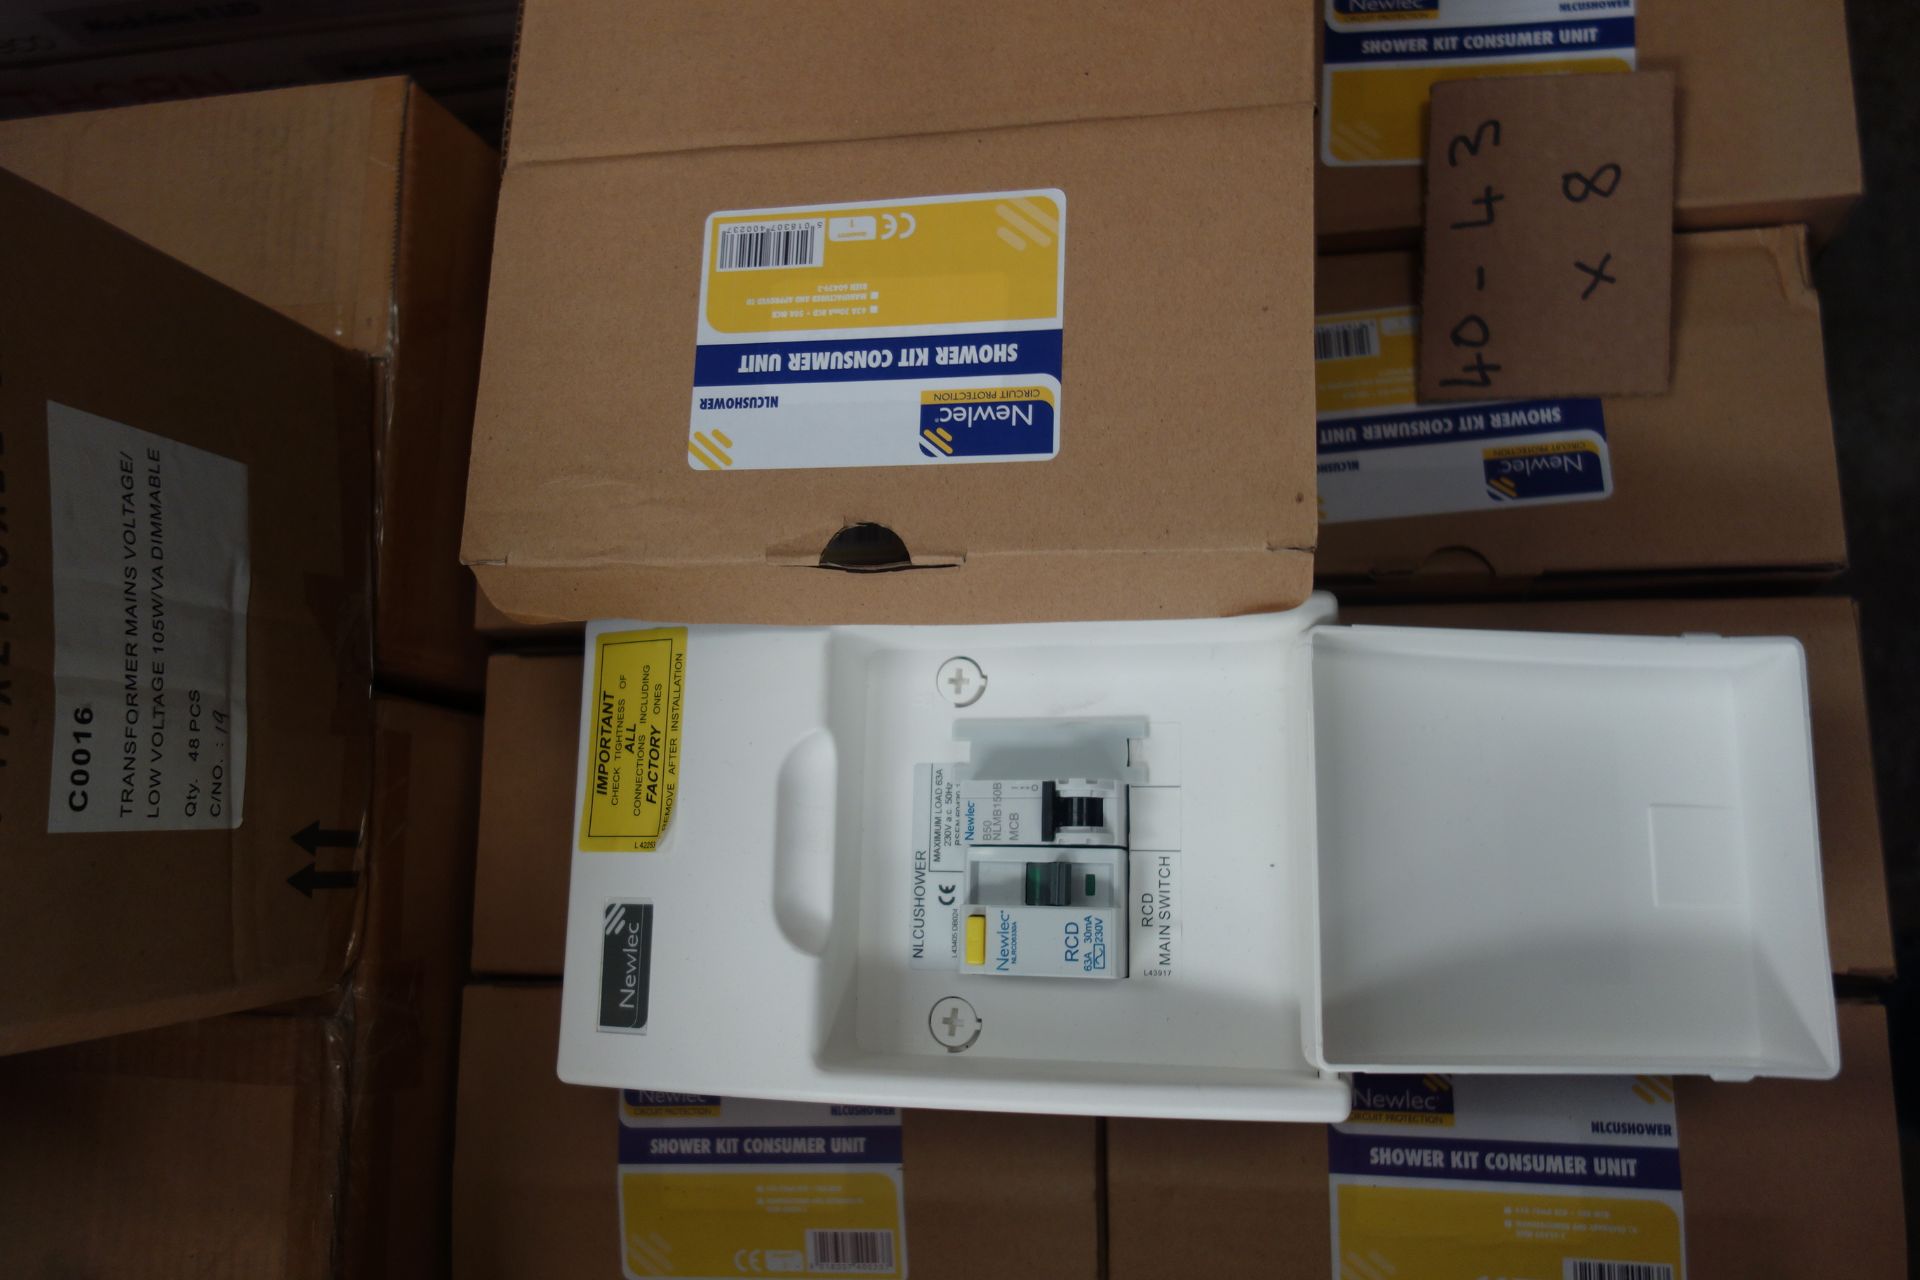 8 X Newlec NLCUSHOWER Shower Kit Consumer Unit C/W 1 X 63A 30MA RCD 1 X 50 AMP MCB